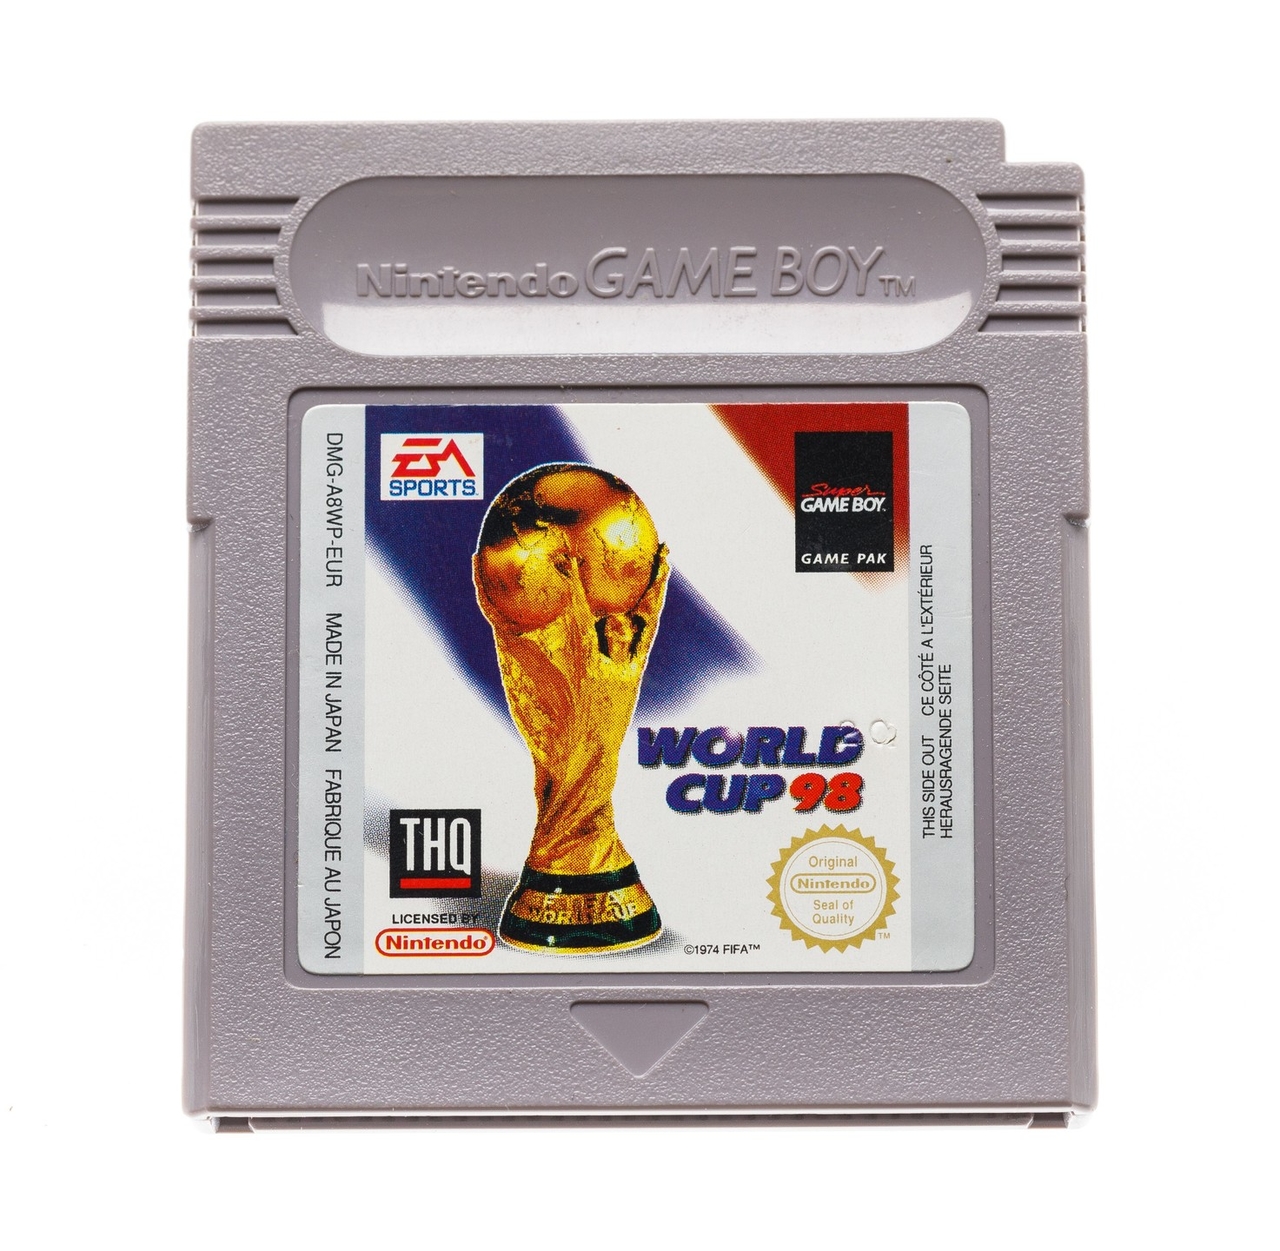 World Cup 98 Kopen | Gameboy Classic Games